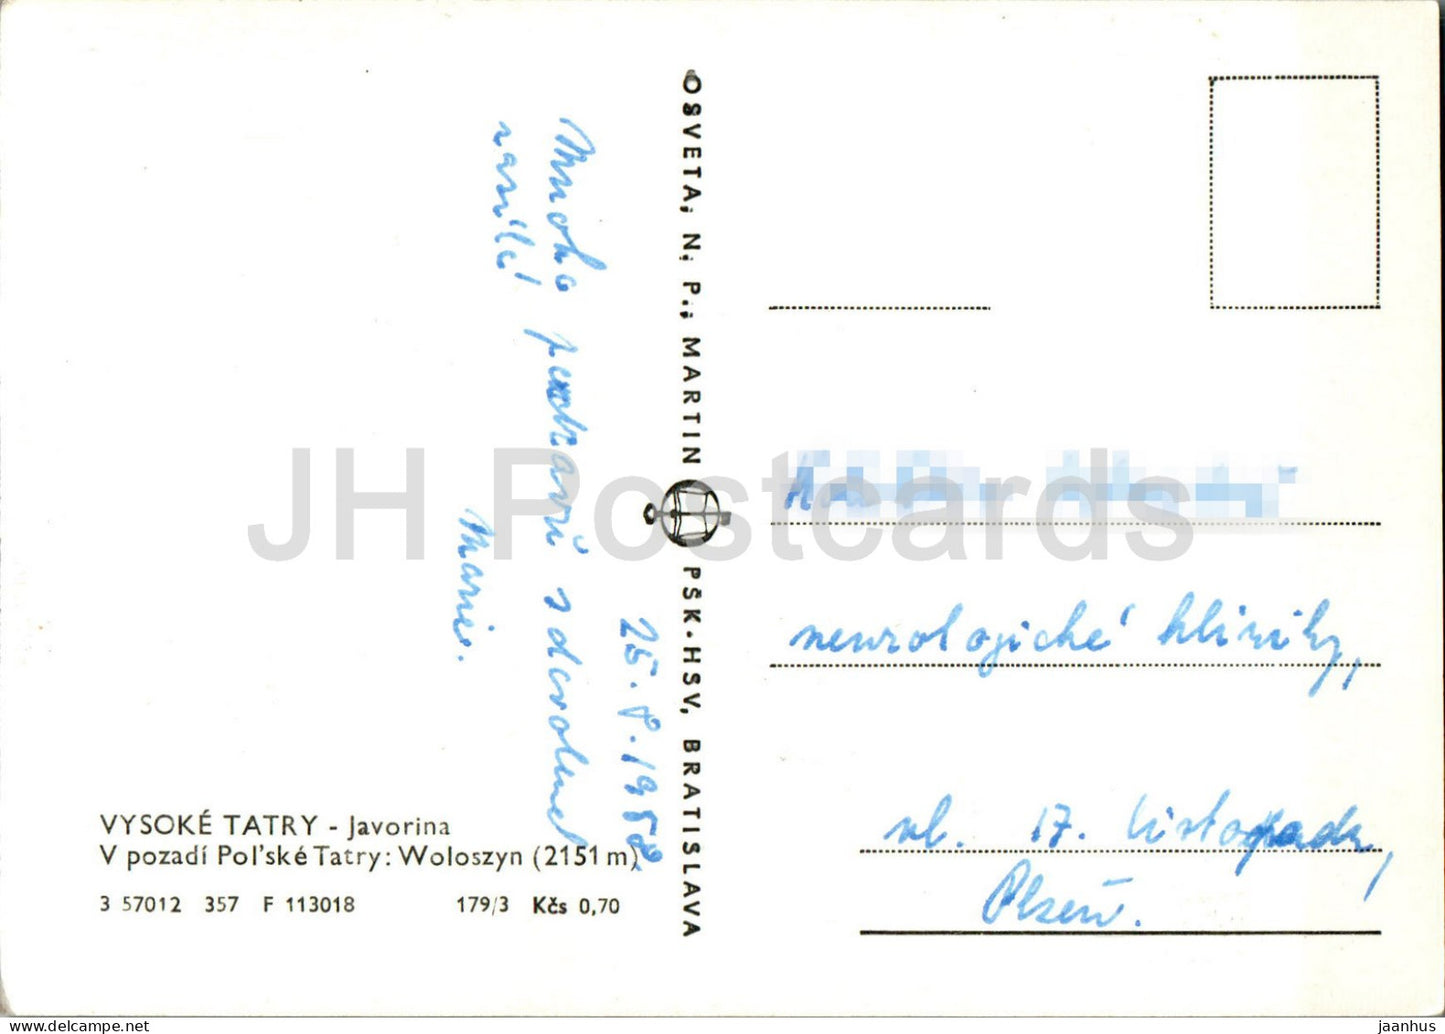 Vysoke Tatry - Javorina - V pozadi Polske Tatry - Hautes Tatras - carte postale ancienne - 1958 - Slovaquie - Tchécoslovaquie - utilisé